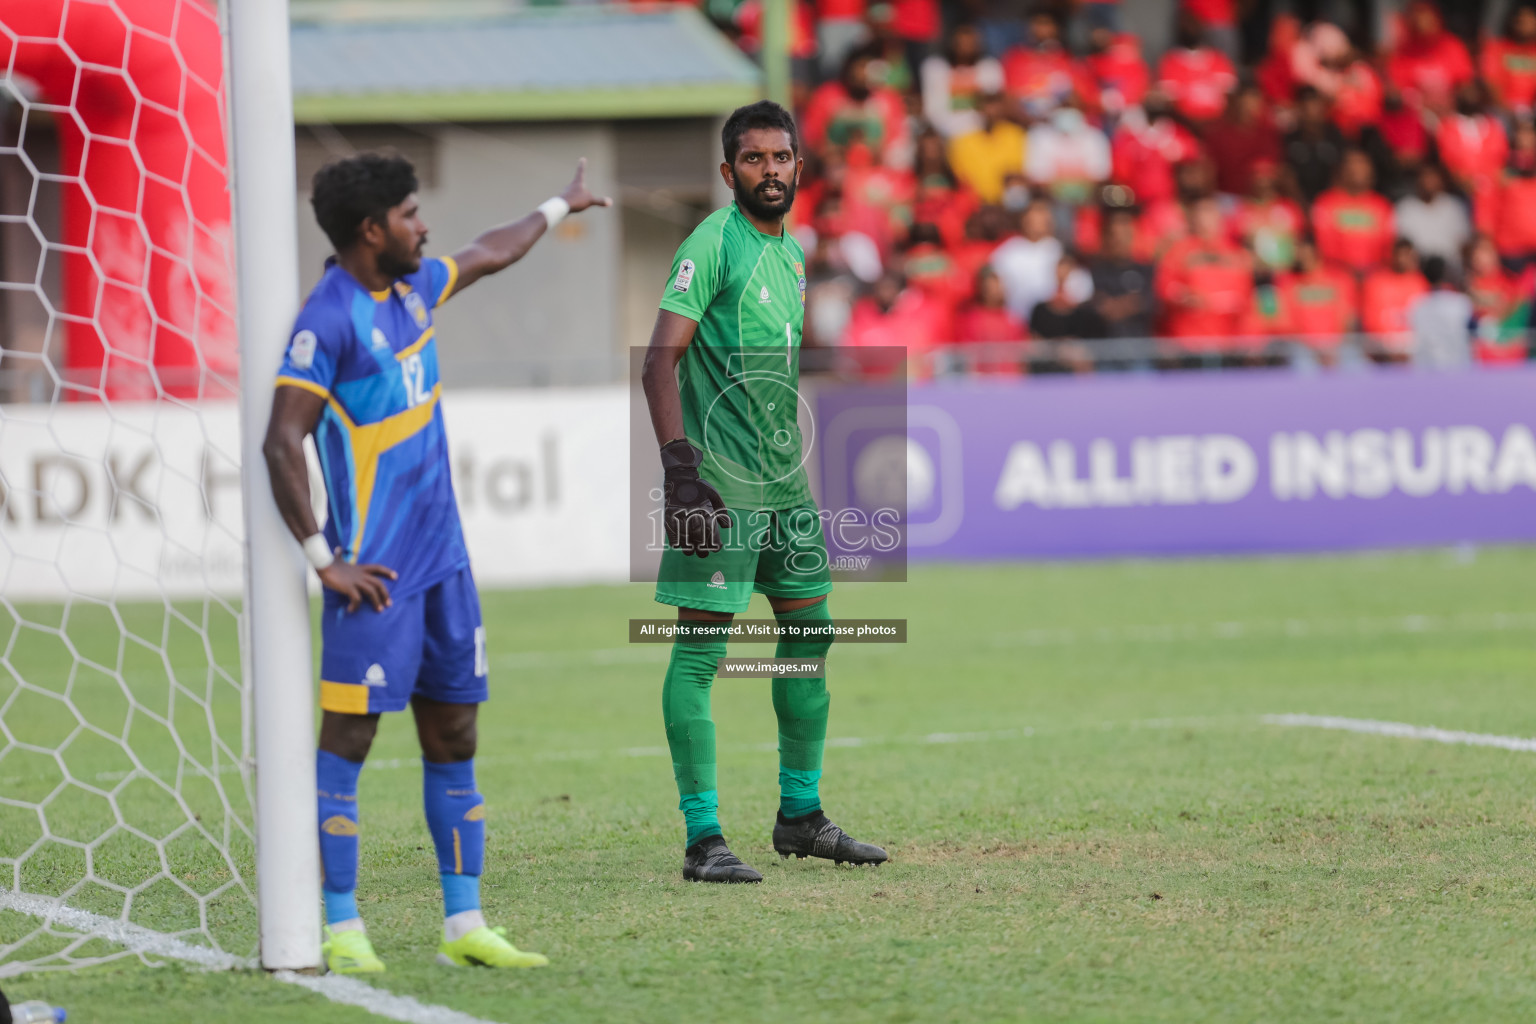 Maldives vs Sri Lanka in SAFF Championship 2021 held on 10th October 2021 in Galolhu National Stadium, Male', Maldives